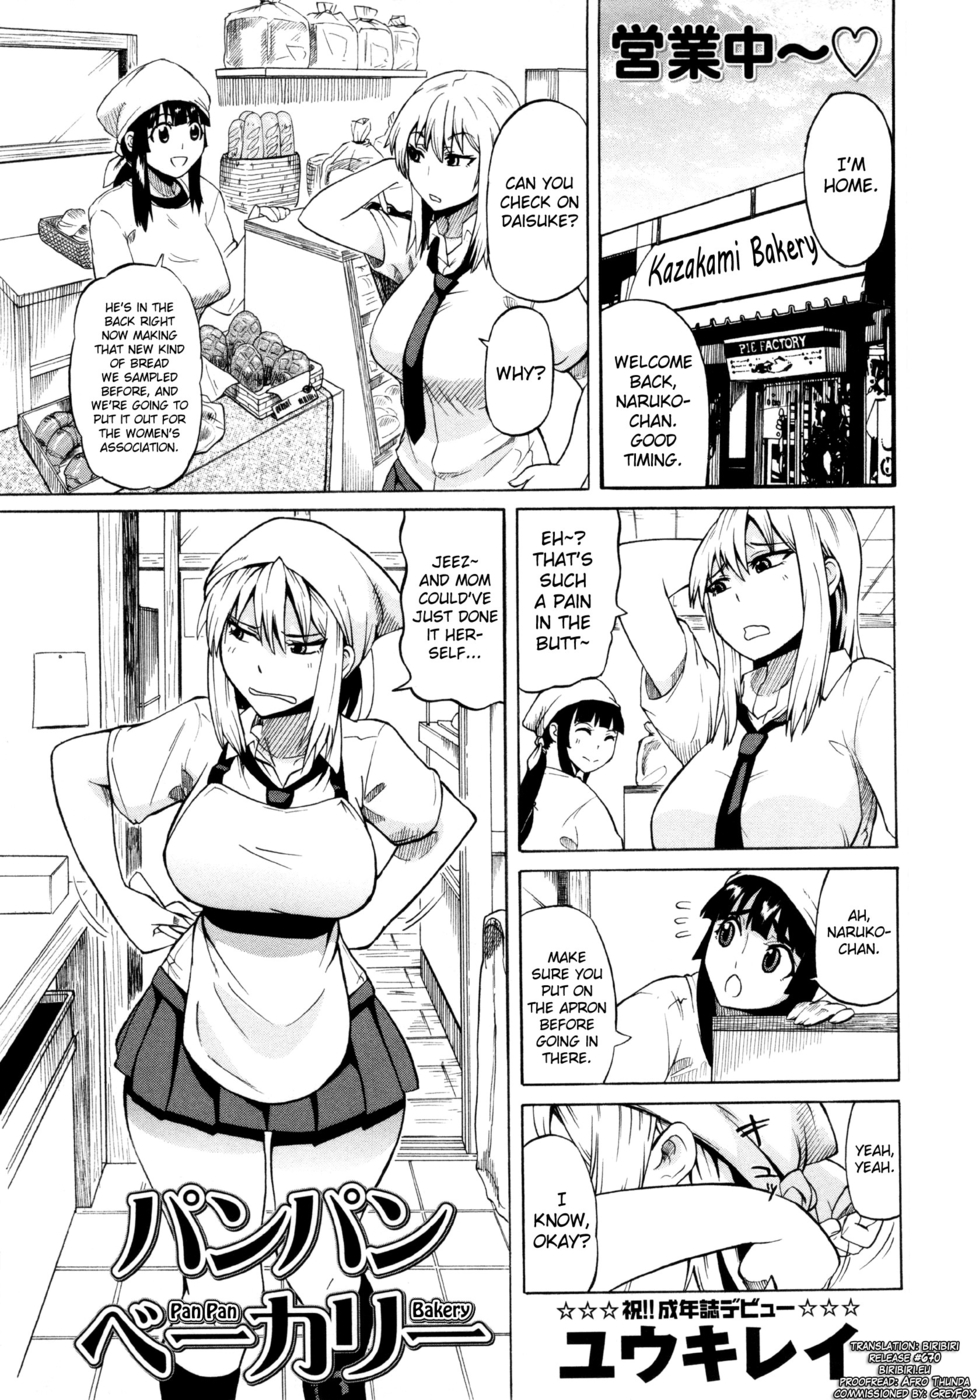 Hentai Manga Comic-Pan Pan Bakery-Read-1